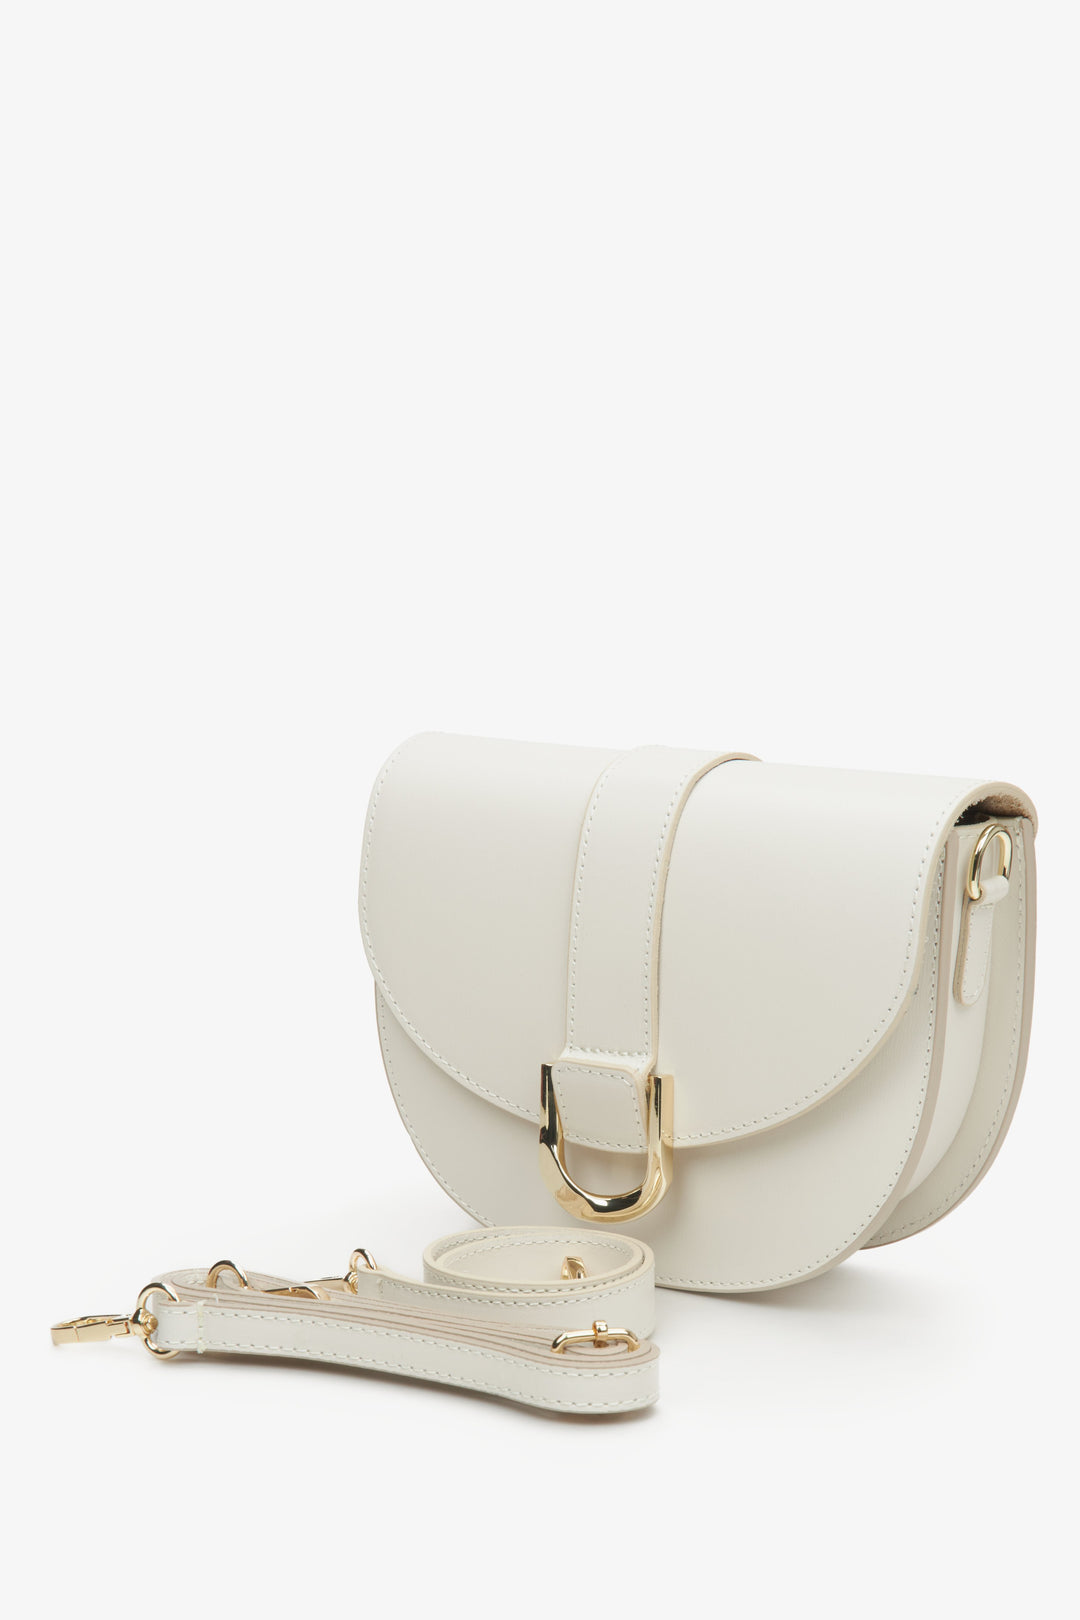 Estro women's cream beige leather crescent-shaped handbag.